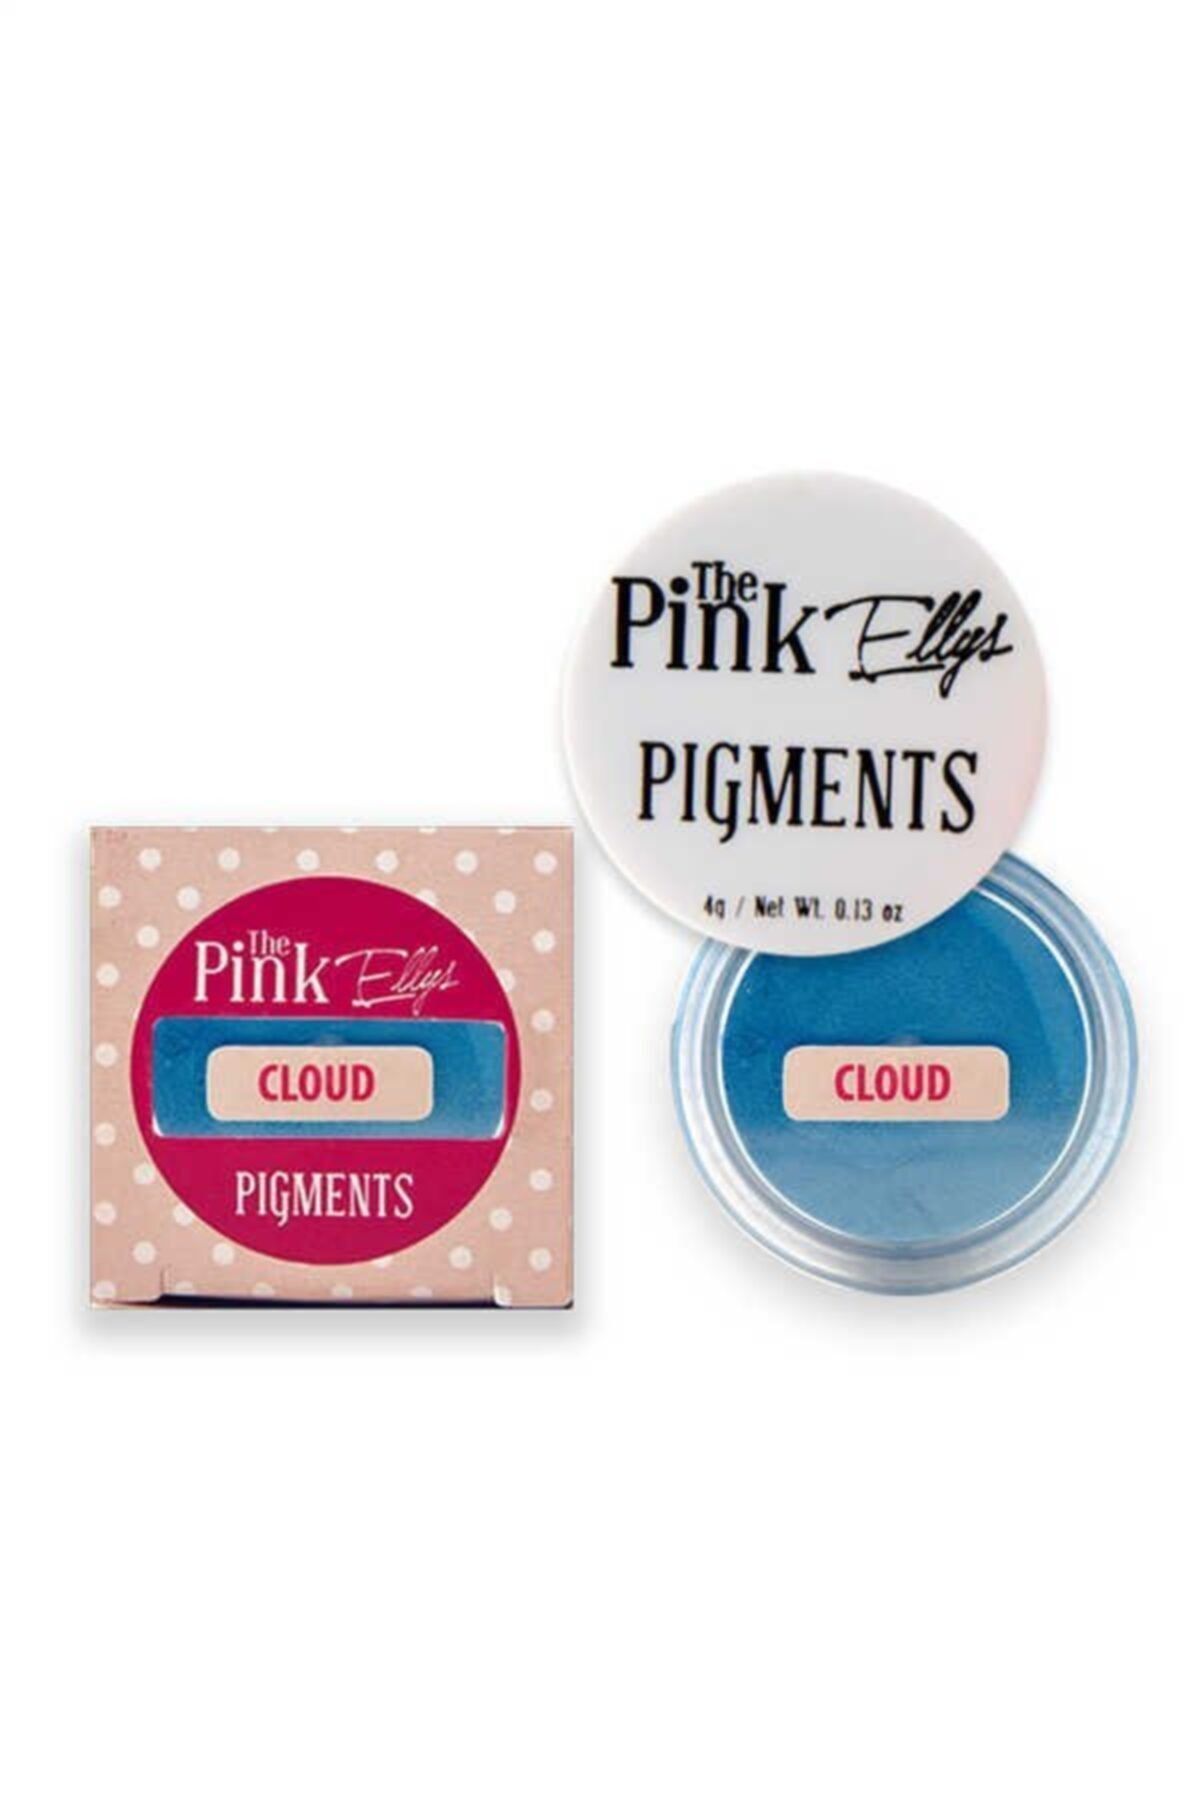 The Pink Ellys Pigments Cloud